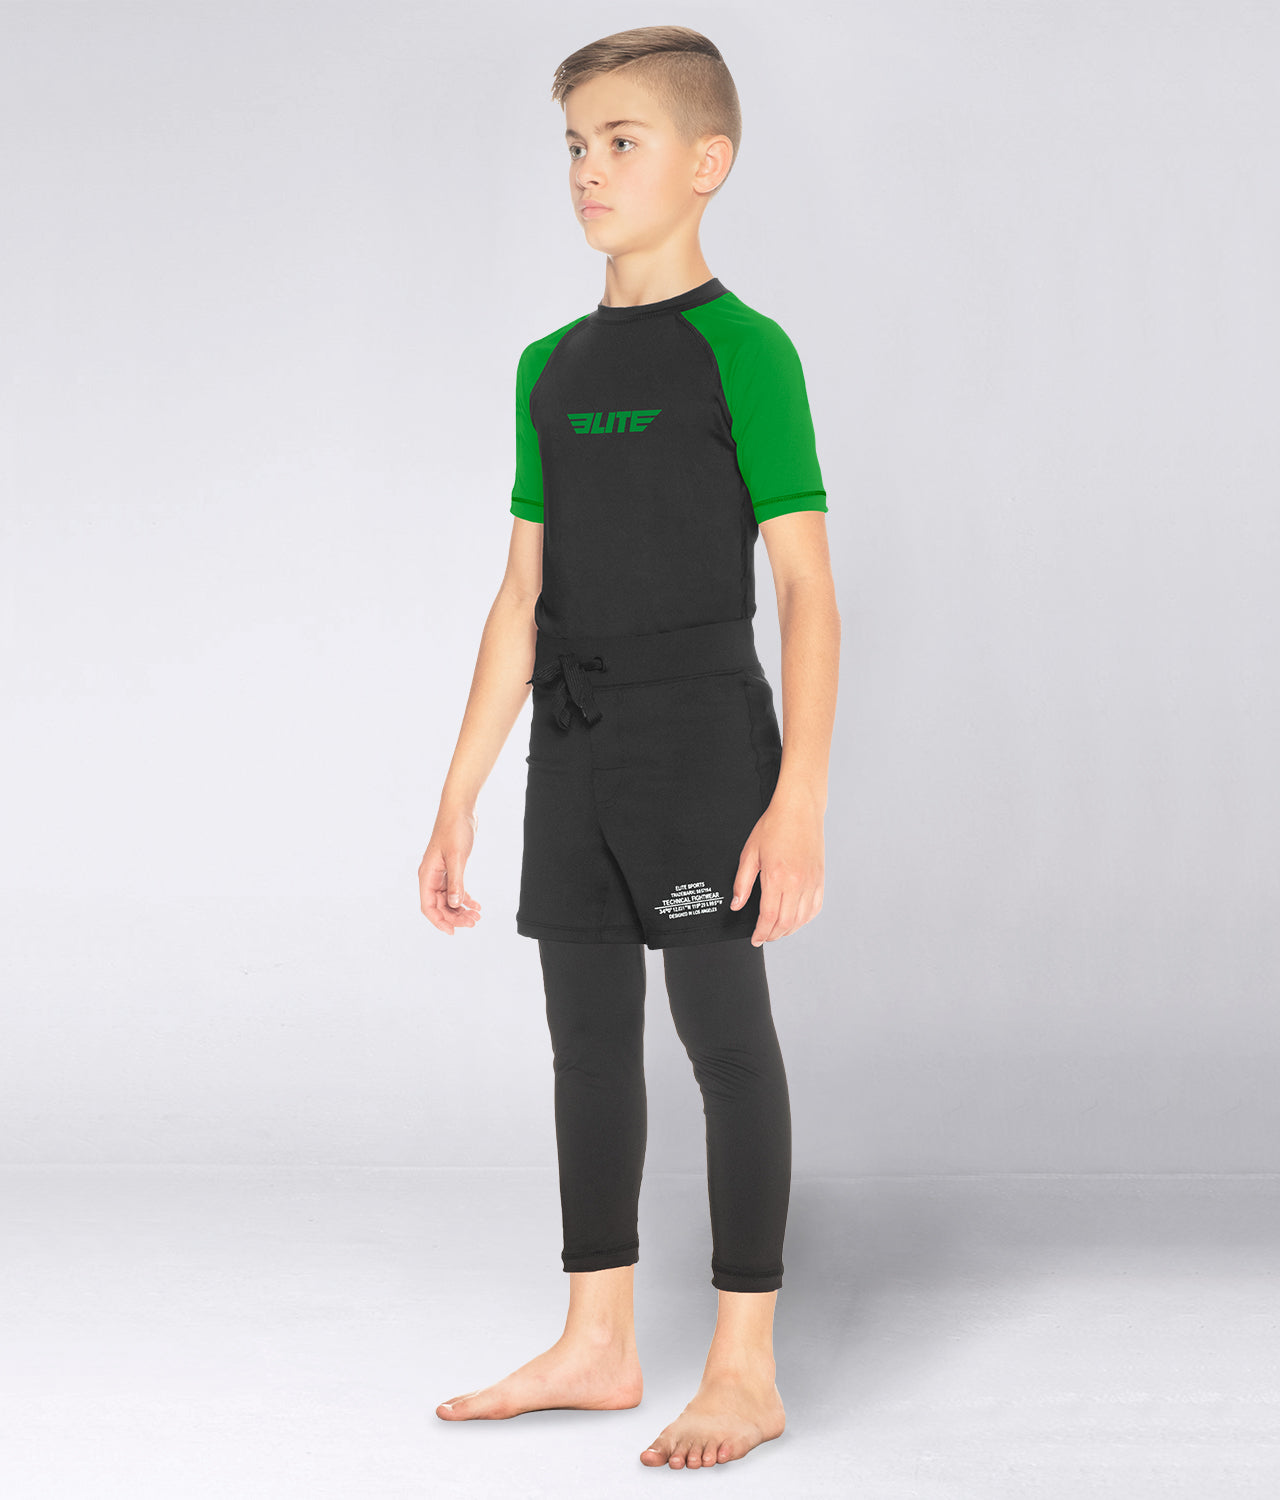 Elite Sports Kids' Standard Green Short Sleeve Training Rash Guard